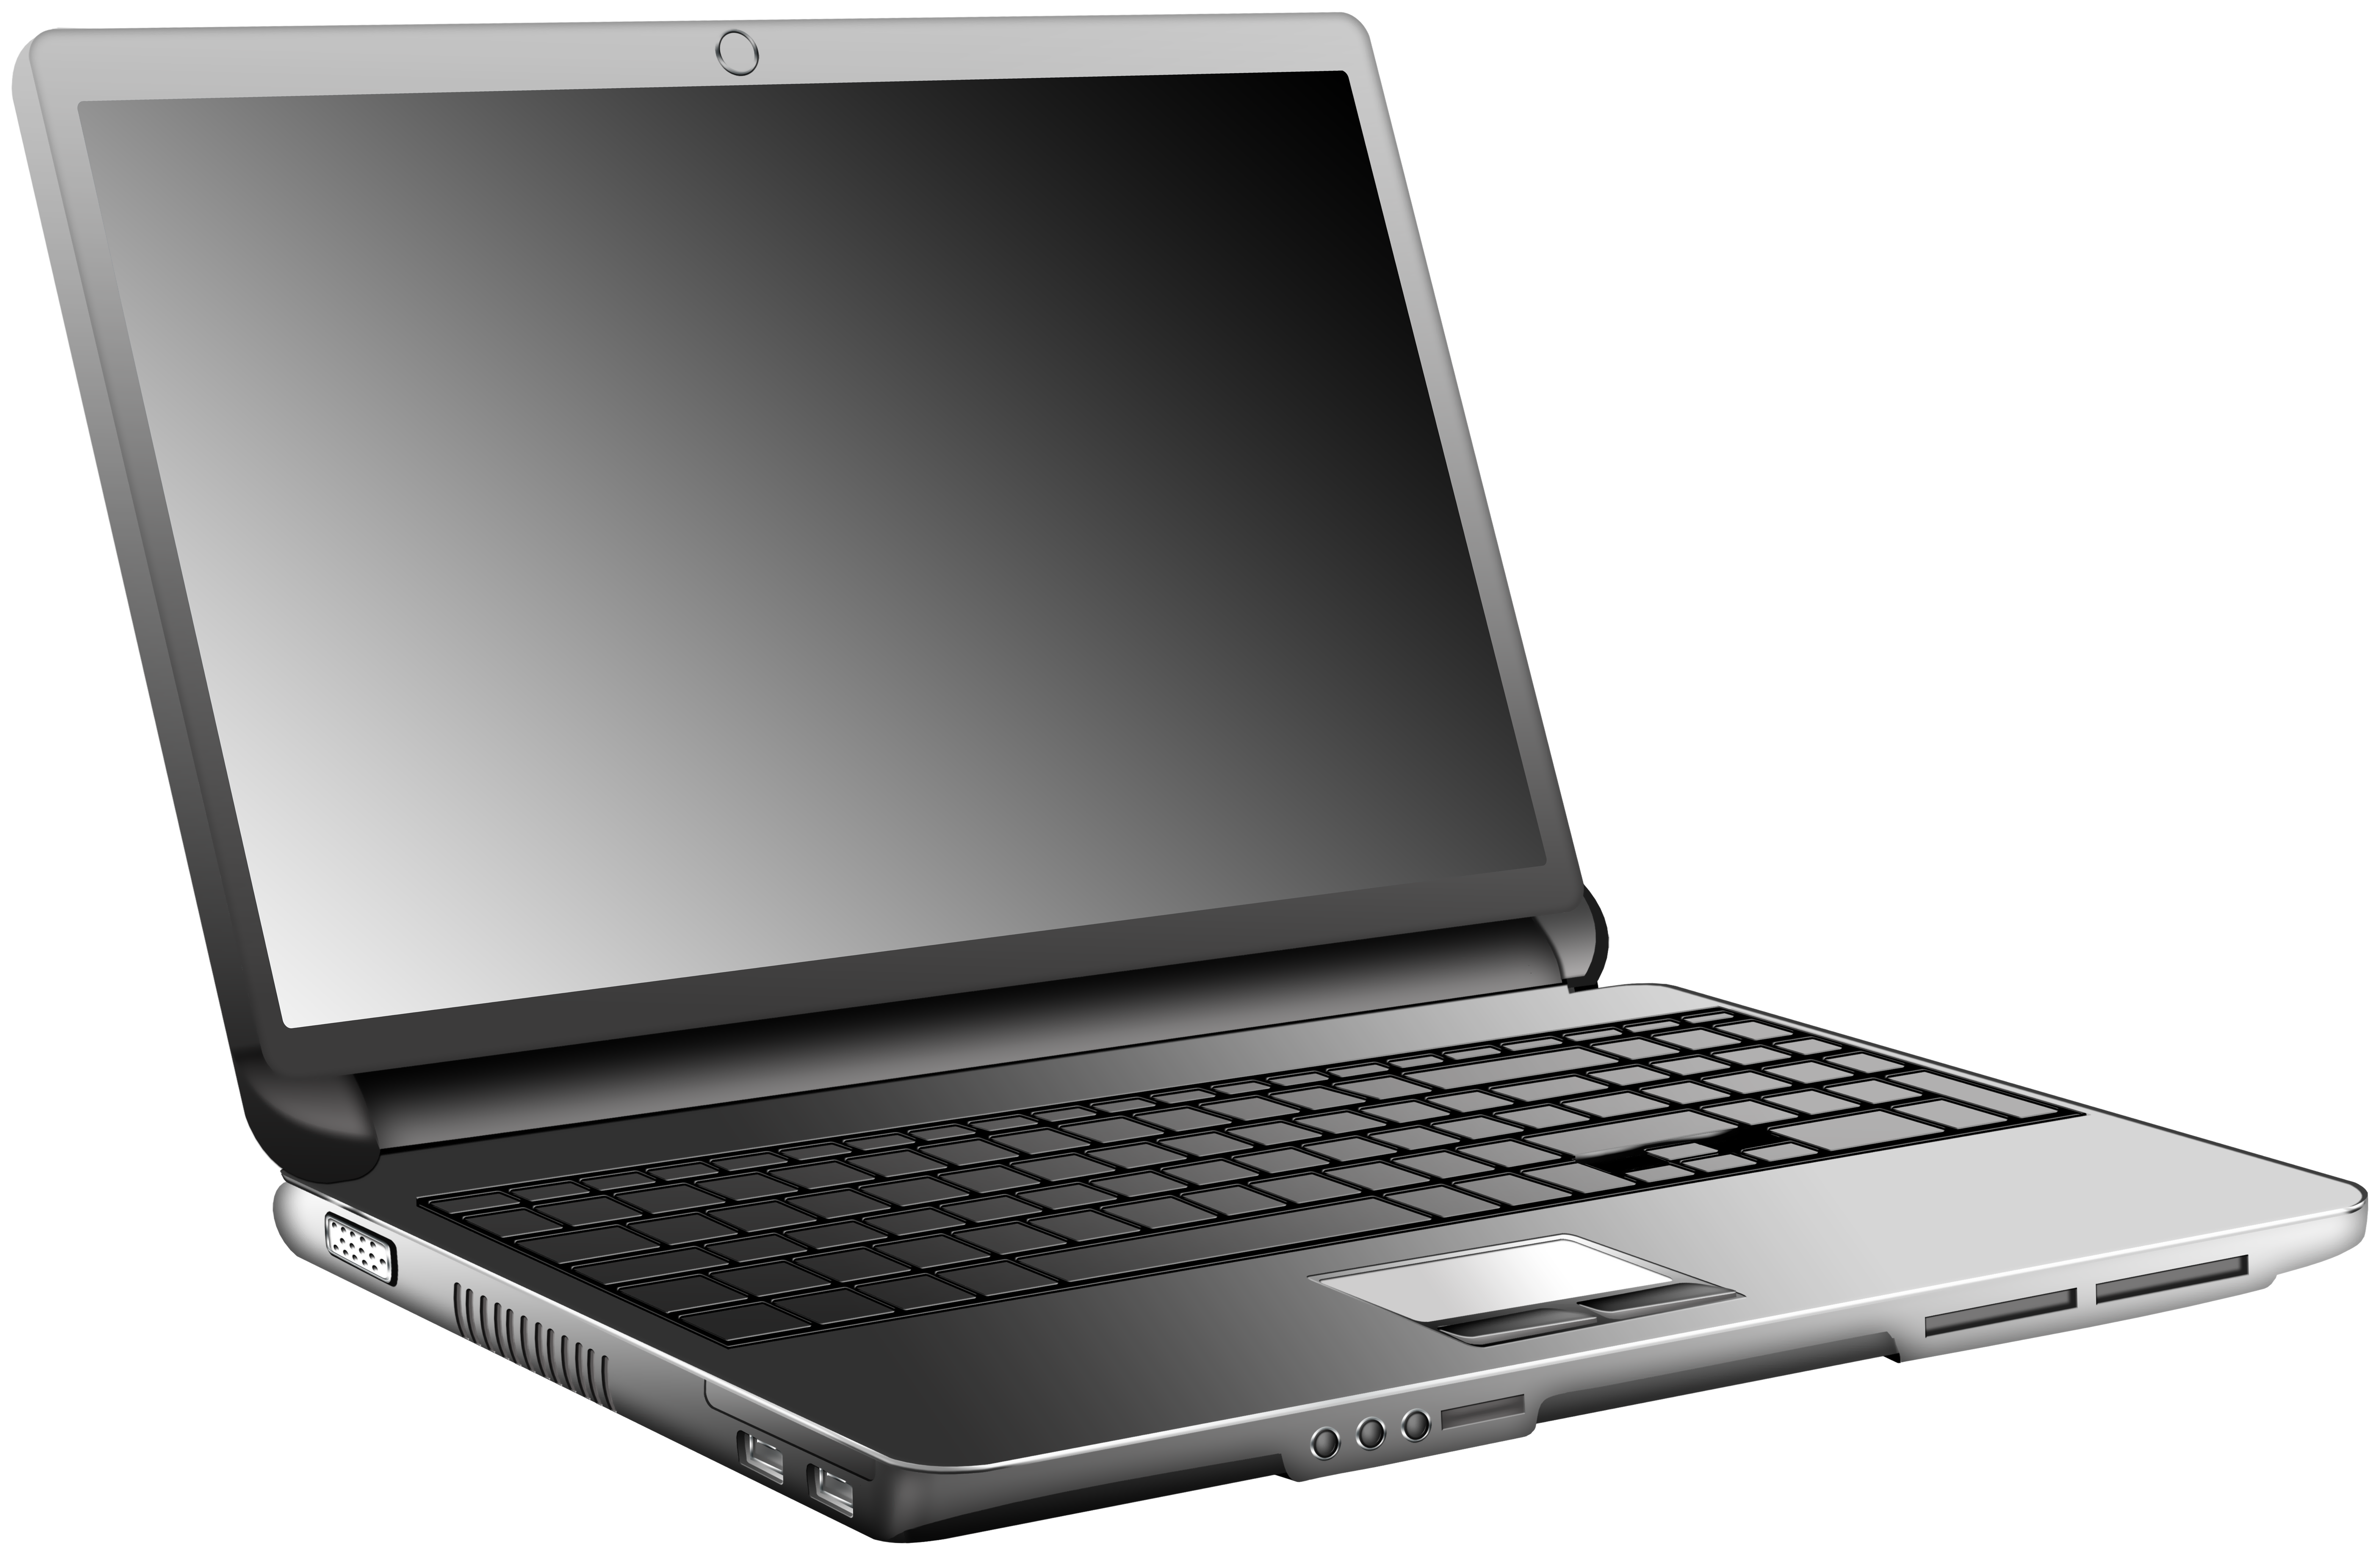 Ноутбук картинка. Ноутбук. Открытый ноутбук. Ноутбук без фона. Ноутбук на белом фоне.